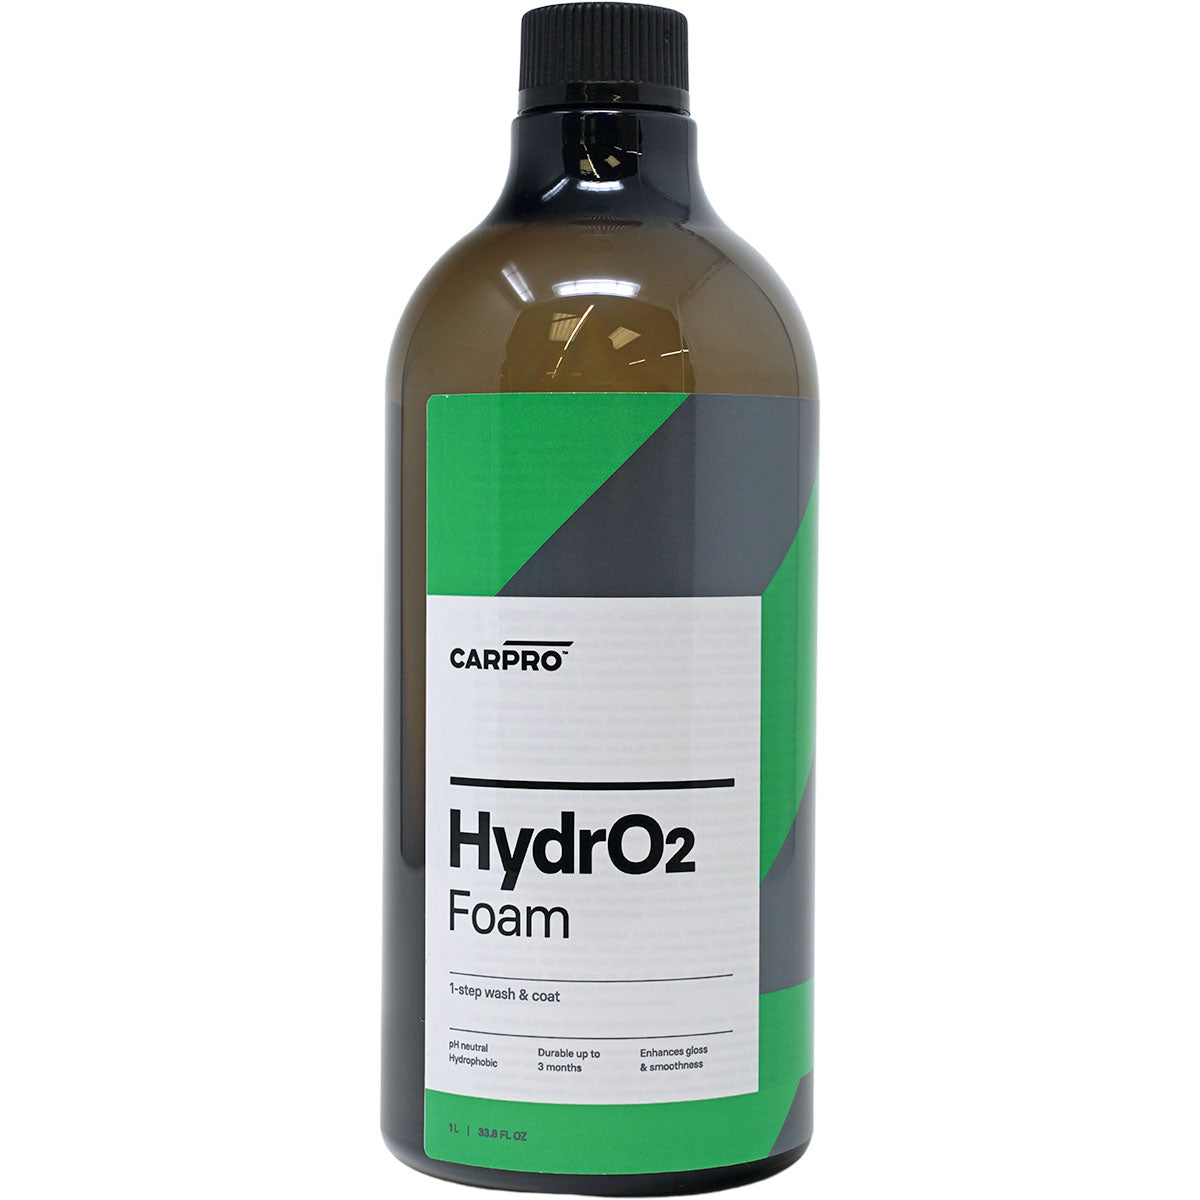 CarPro Hydr02 Foam